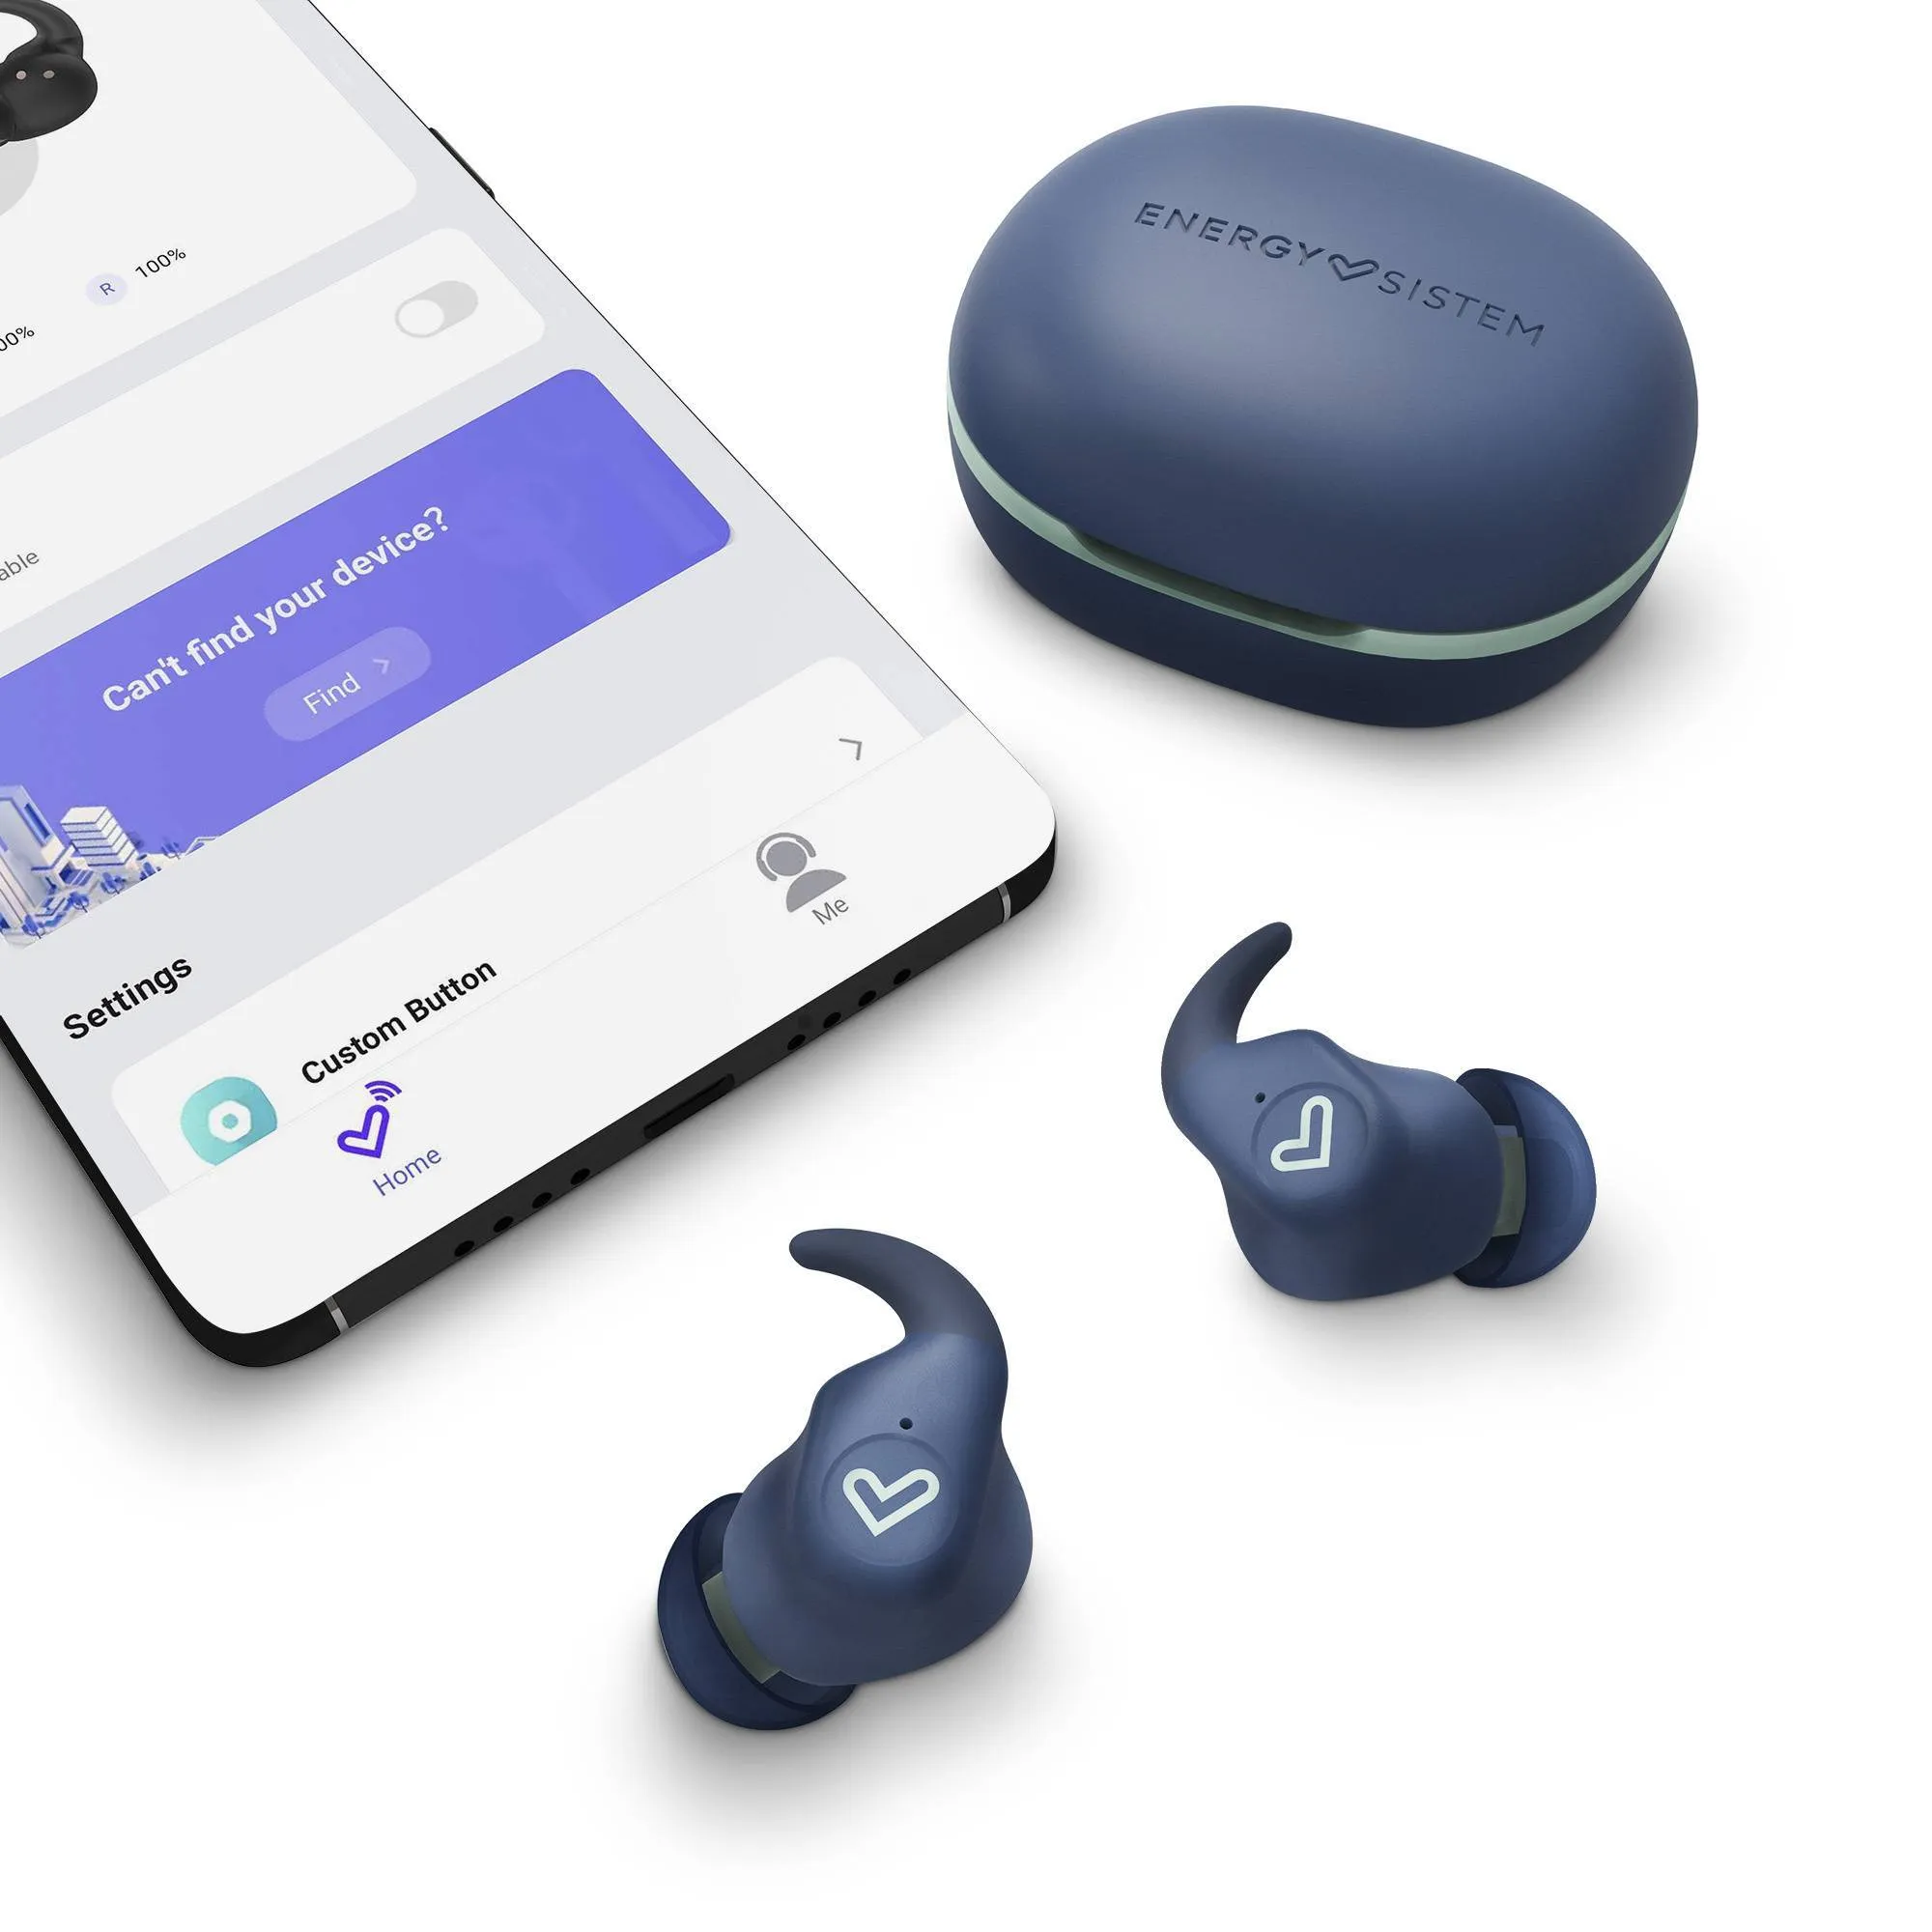 Customise your Arena earphones with ESmart Connect App